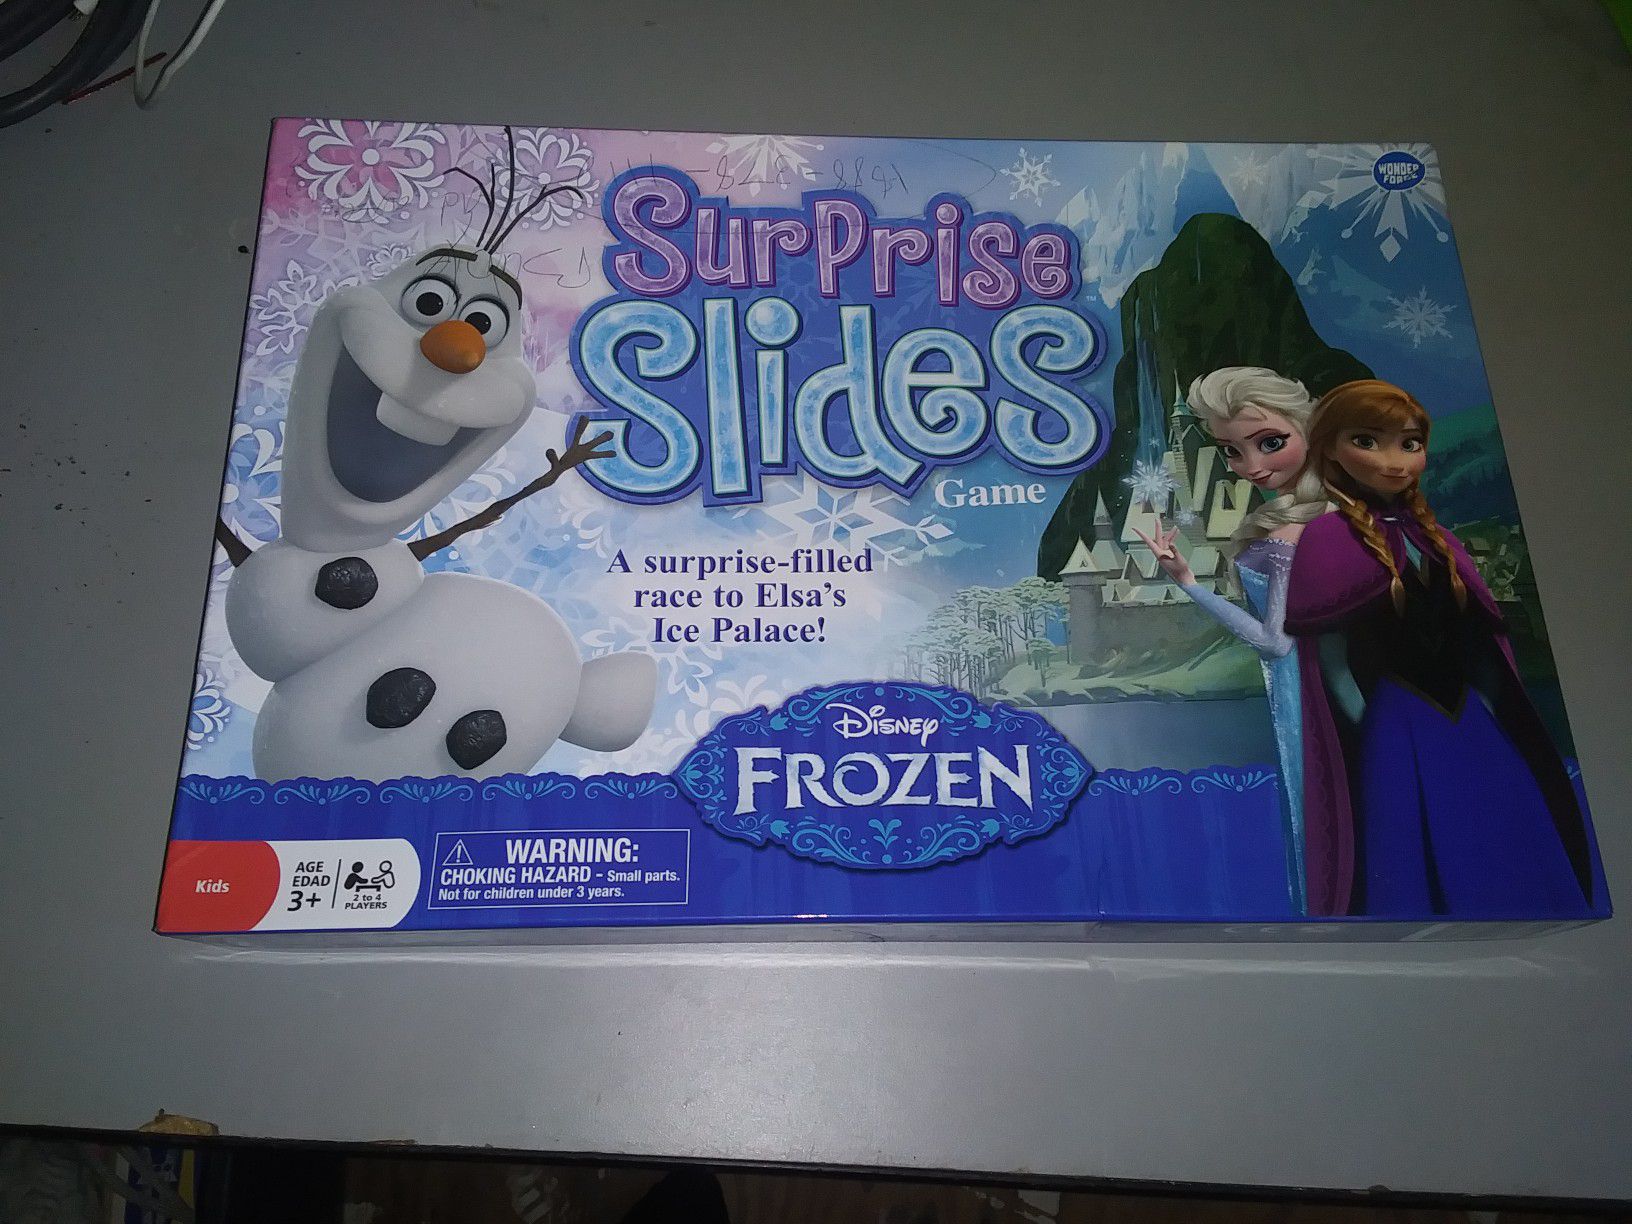 Frozen Surprise Slides Board game